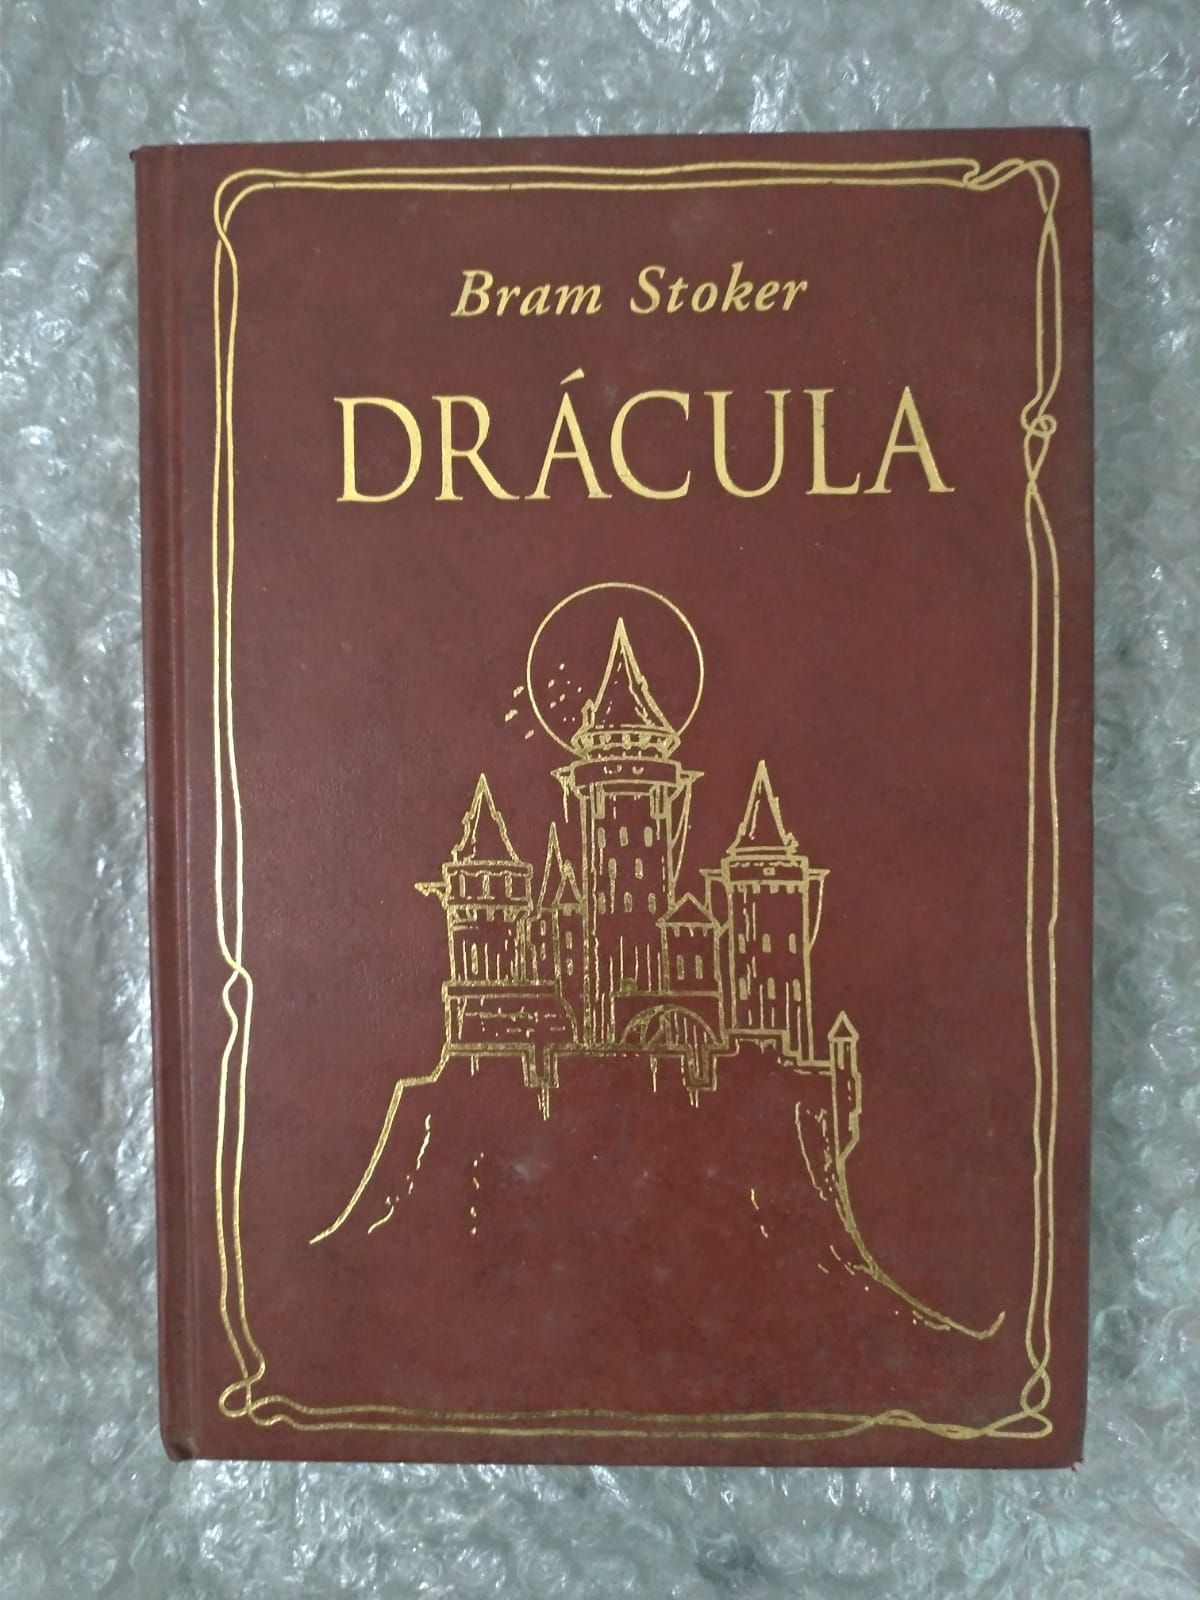 Drácula - Bram Stoker - Capa Dura Nova Cultural - Seboterapia - Livros